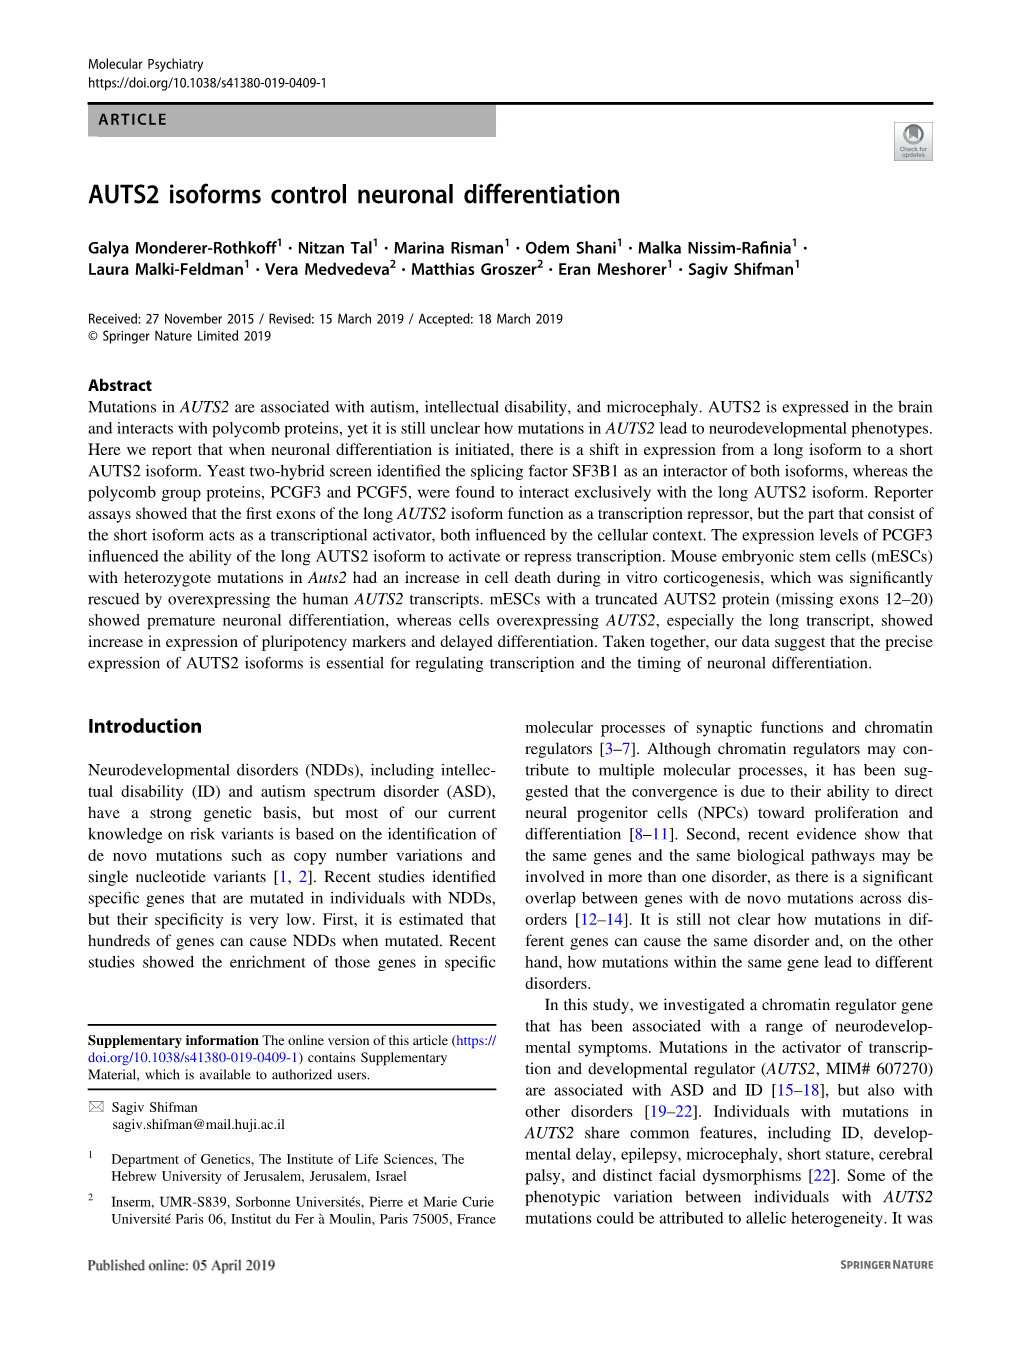 AUTS2 Isoforms Control Neuronal Differentiation